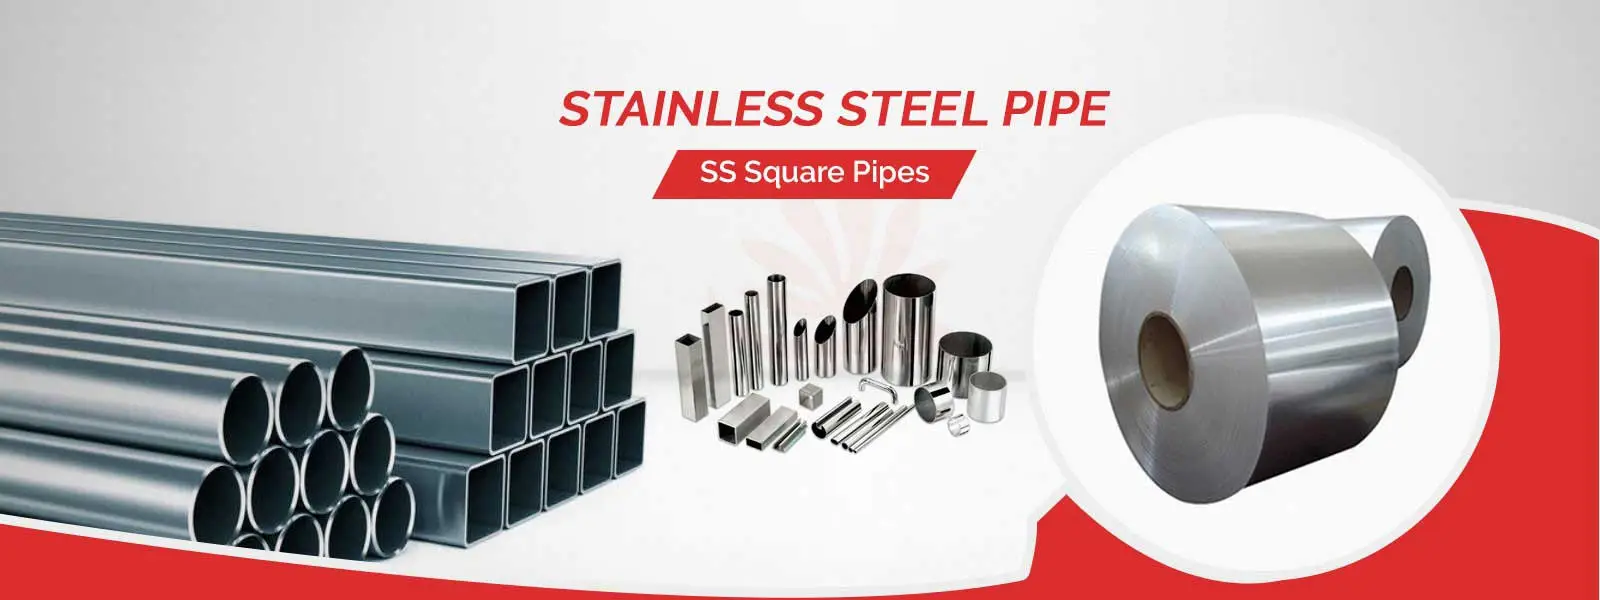 Stainless Steel Pipe Manufacturers in Karnataka